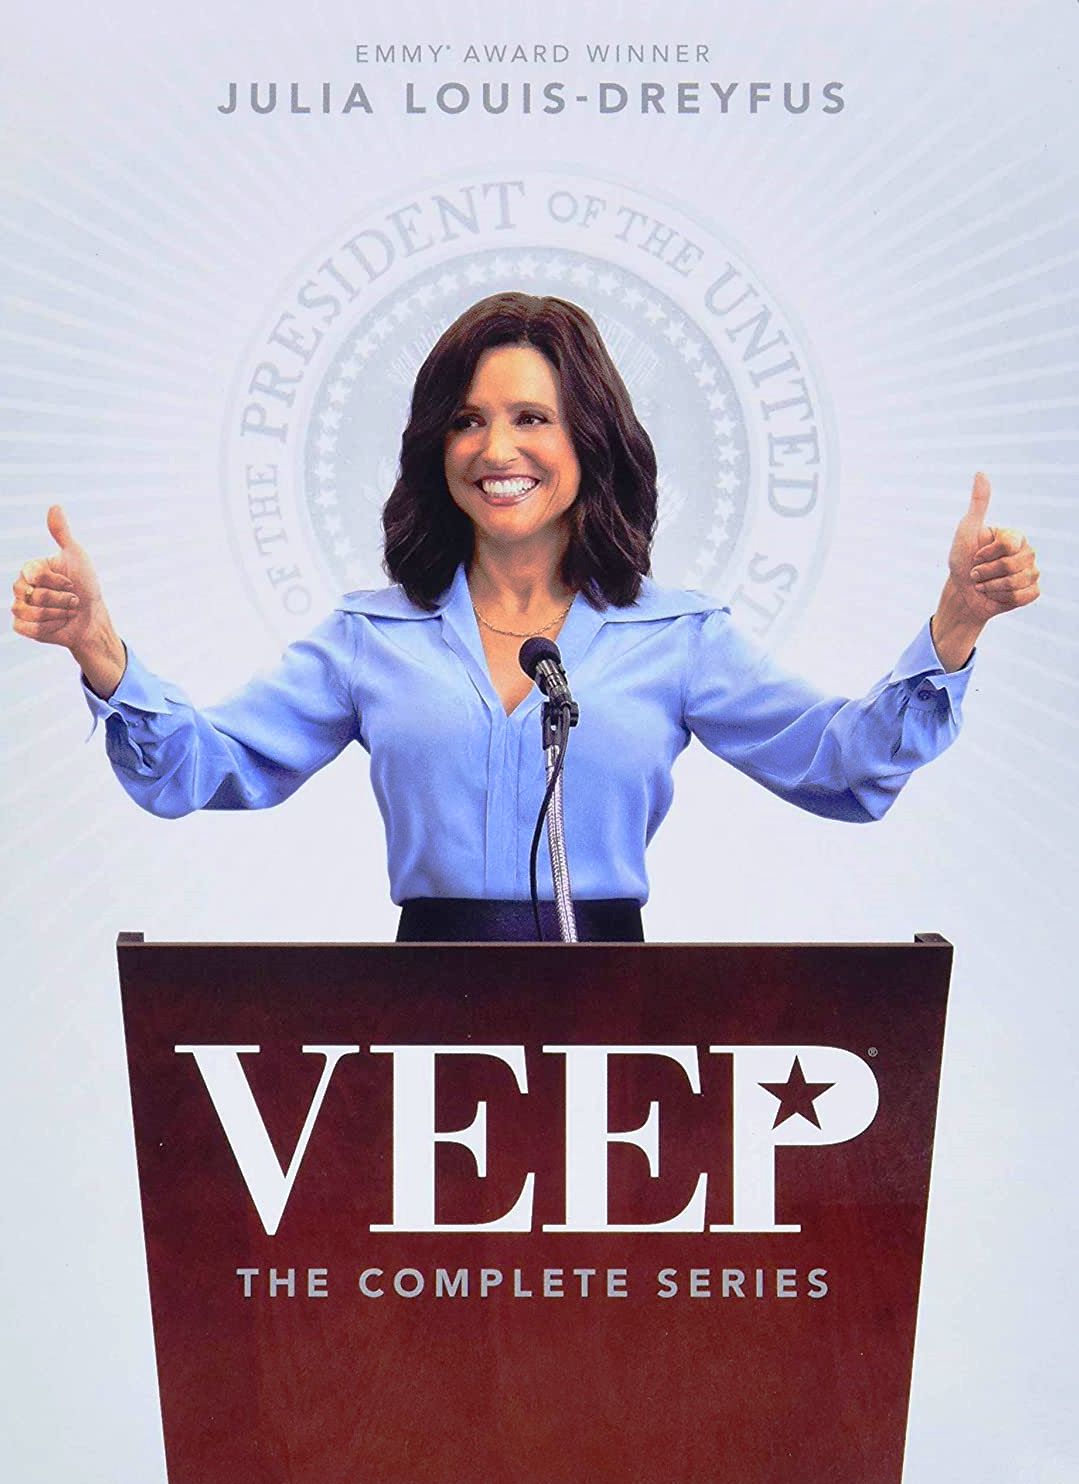 Veep – Vicepresidente incompetente